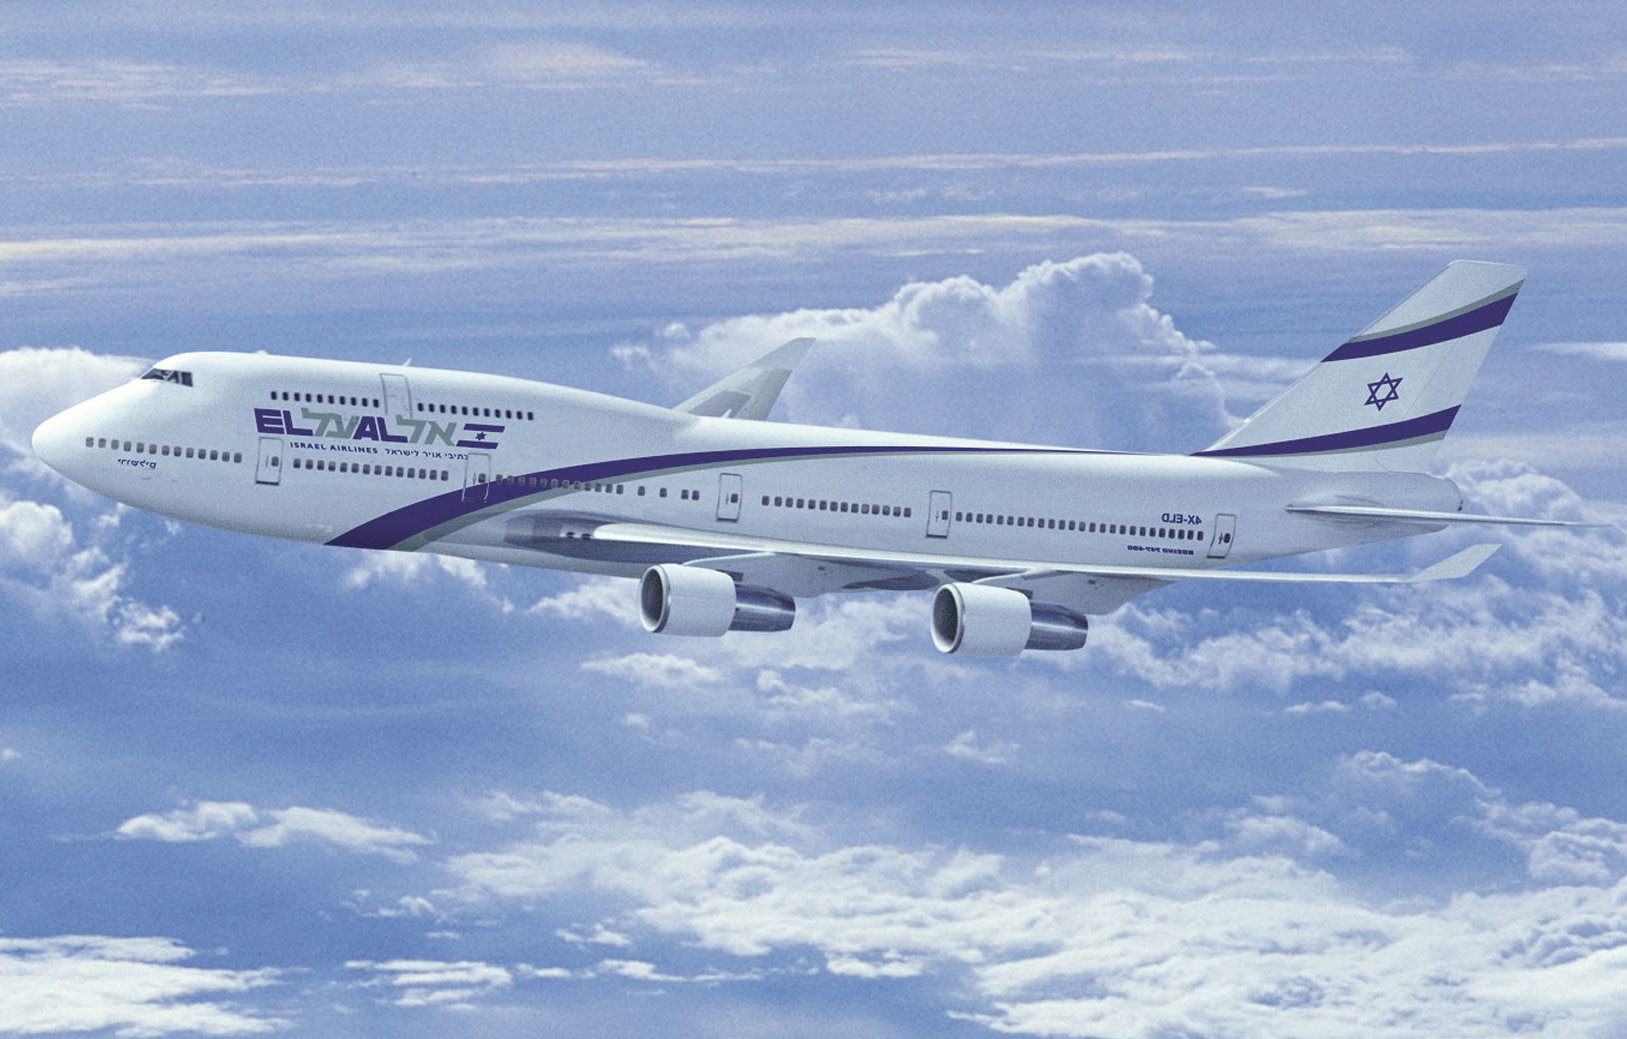 El al israel. Боинг 747 el al. Израильские авиалинии Боинг 747. Самолёт авиакомпаний Эль Аль.